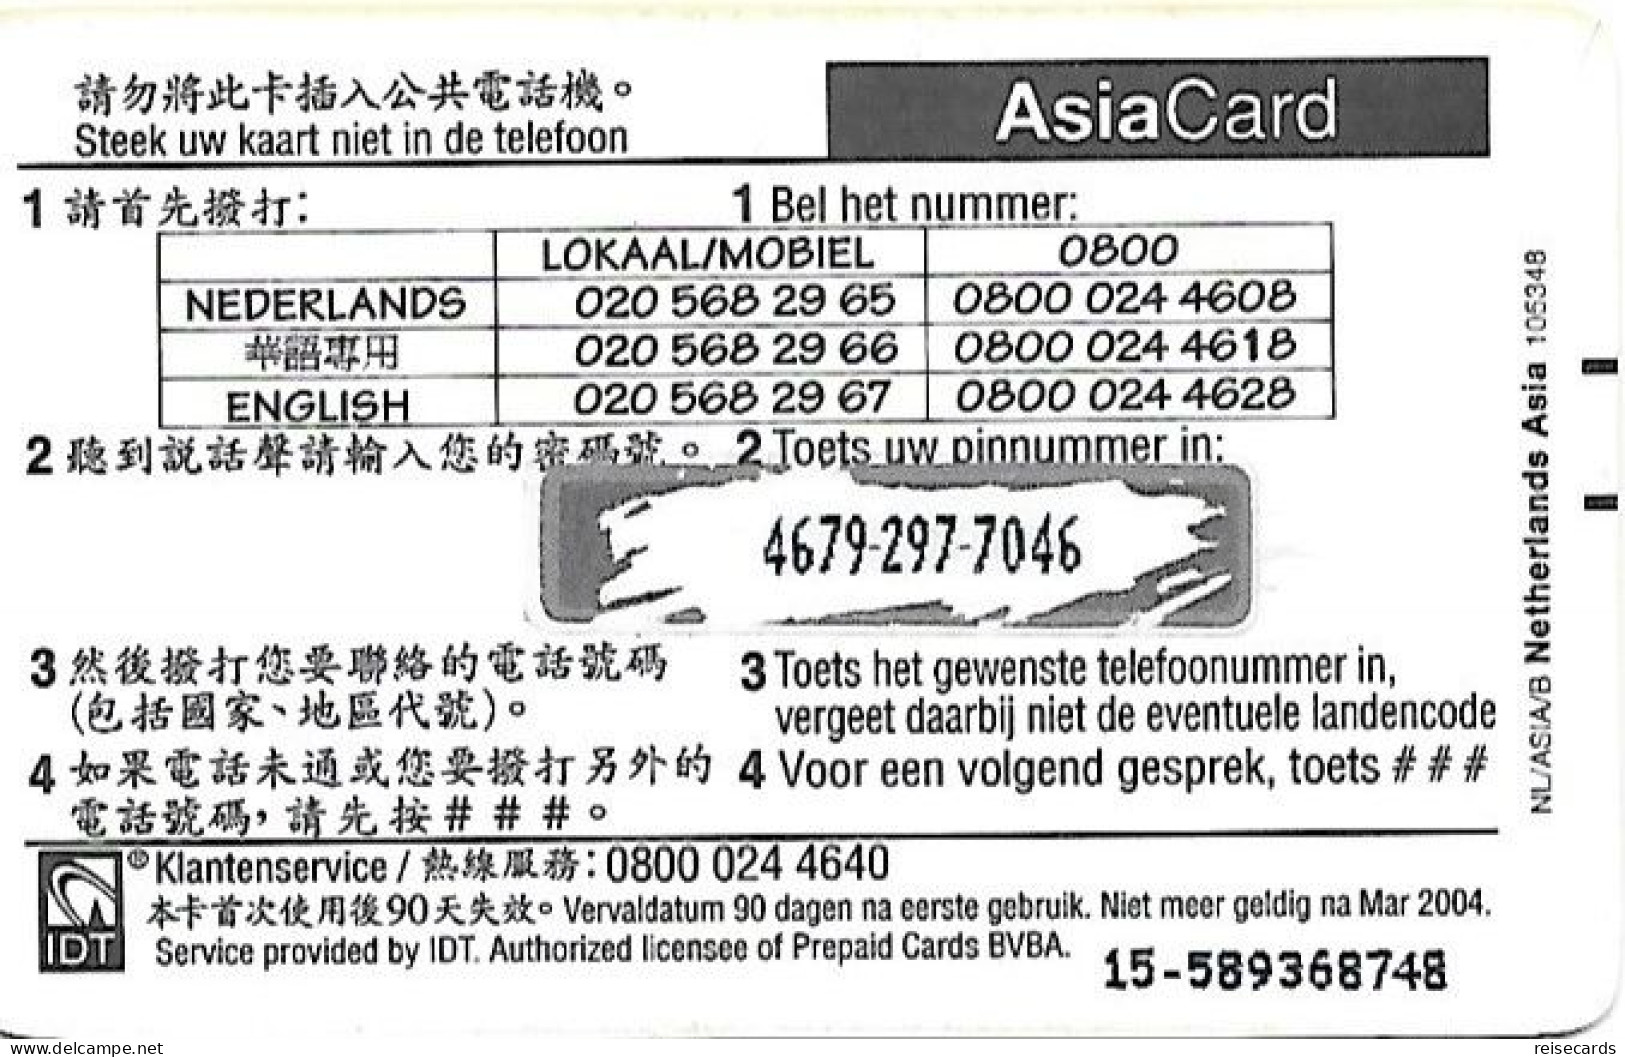 Netherlands: Prepaid IDT - Asia Card 03.04 - [3] Sim Cards, Prepaid & Refills